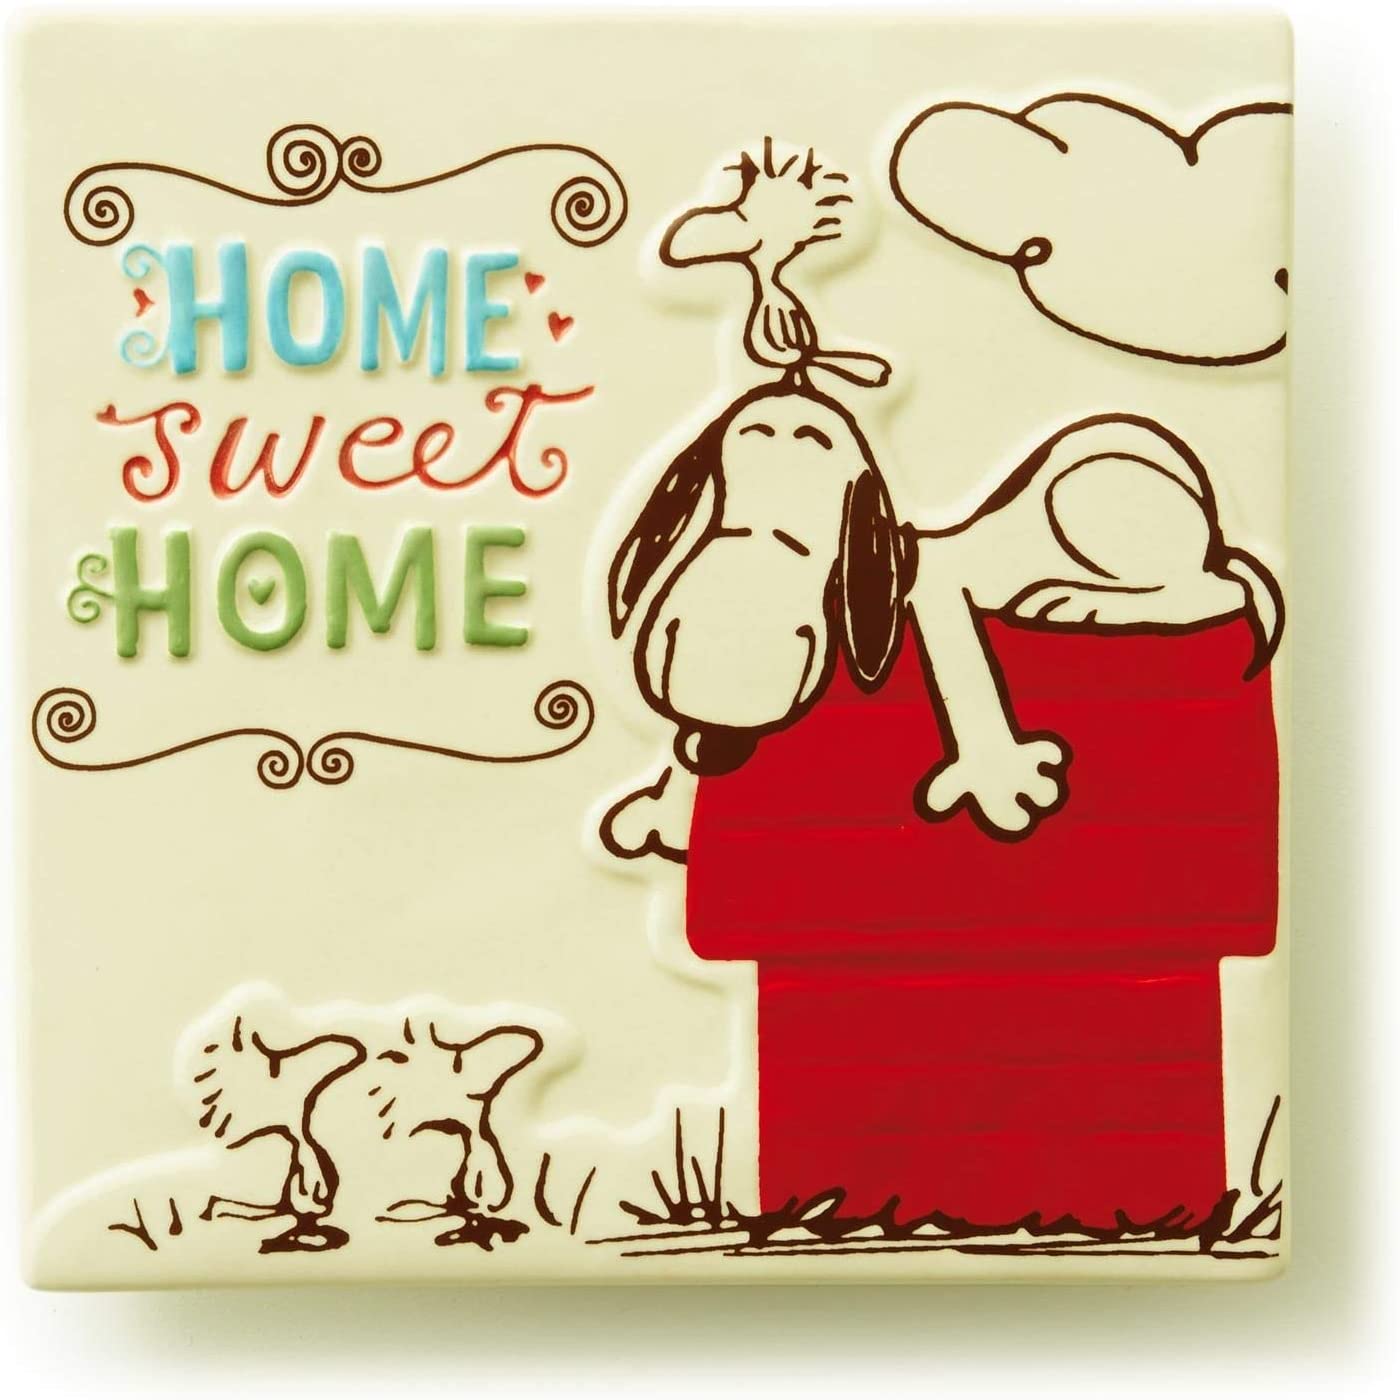 Peanuts Snoopy “Home Sweet Home” Ceramic Tile Trivet/Plaque